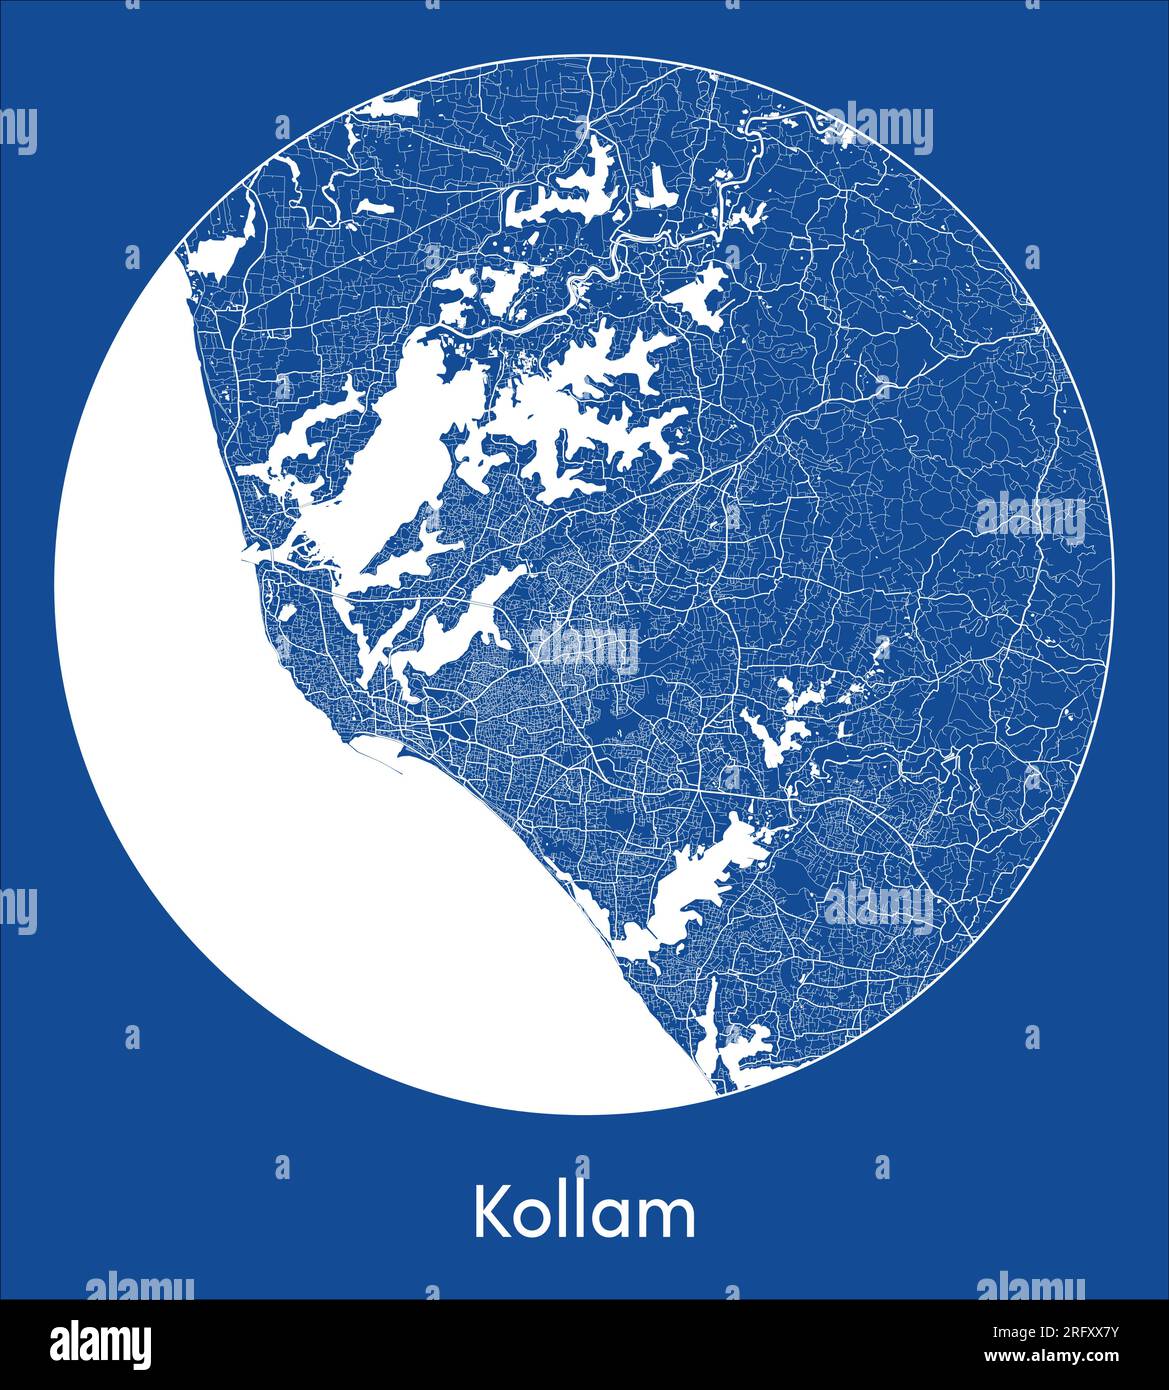 City Map Kollam India Asia blue print round Circle vector illustration Stock Vector